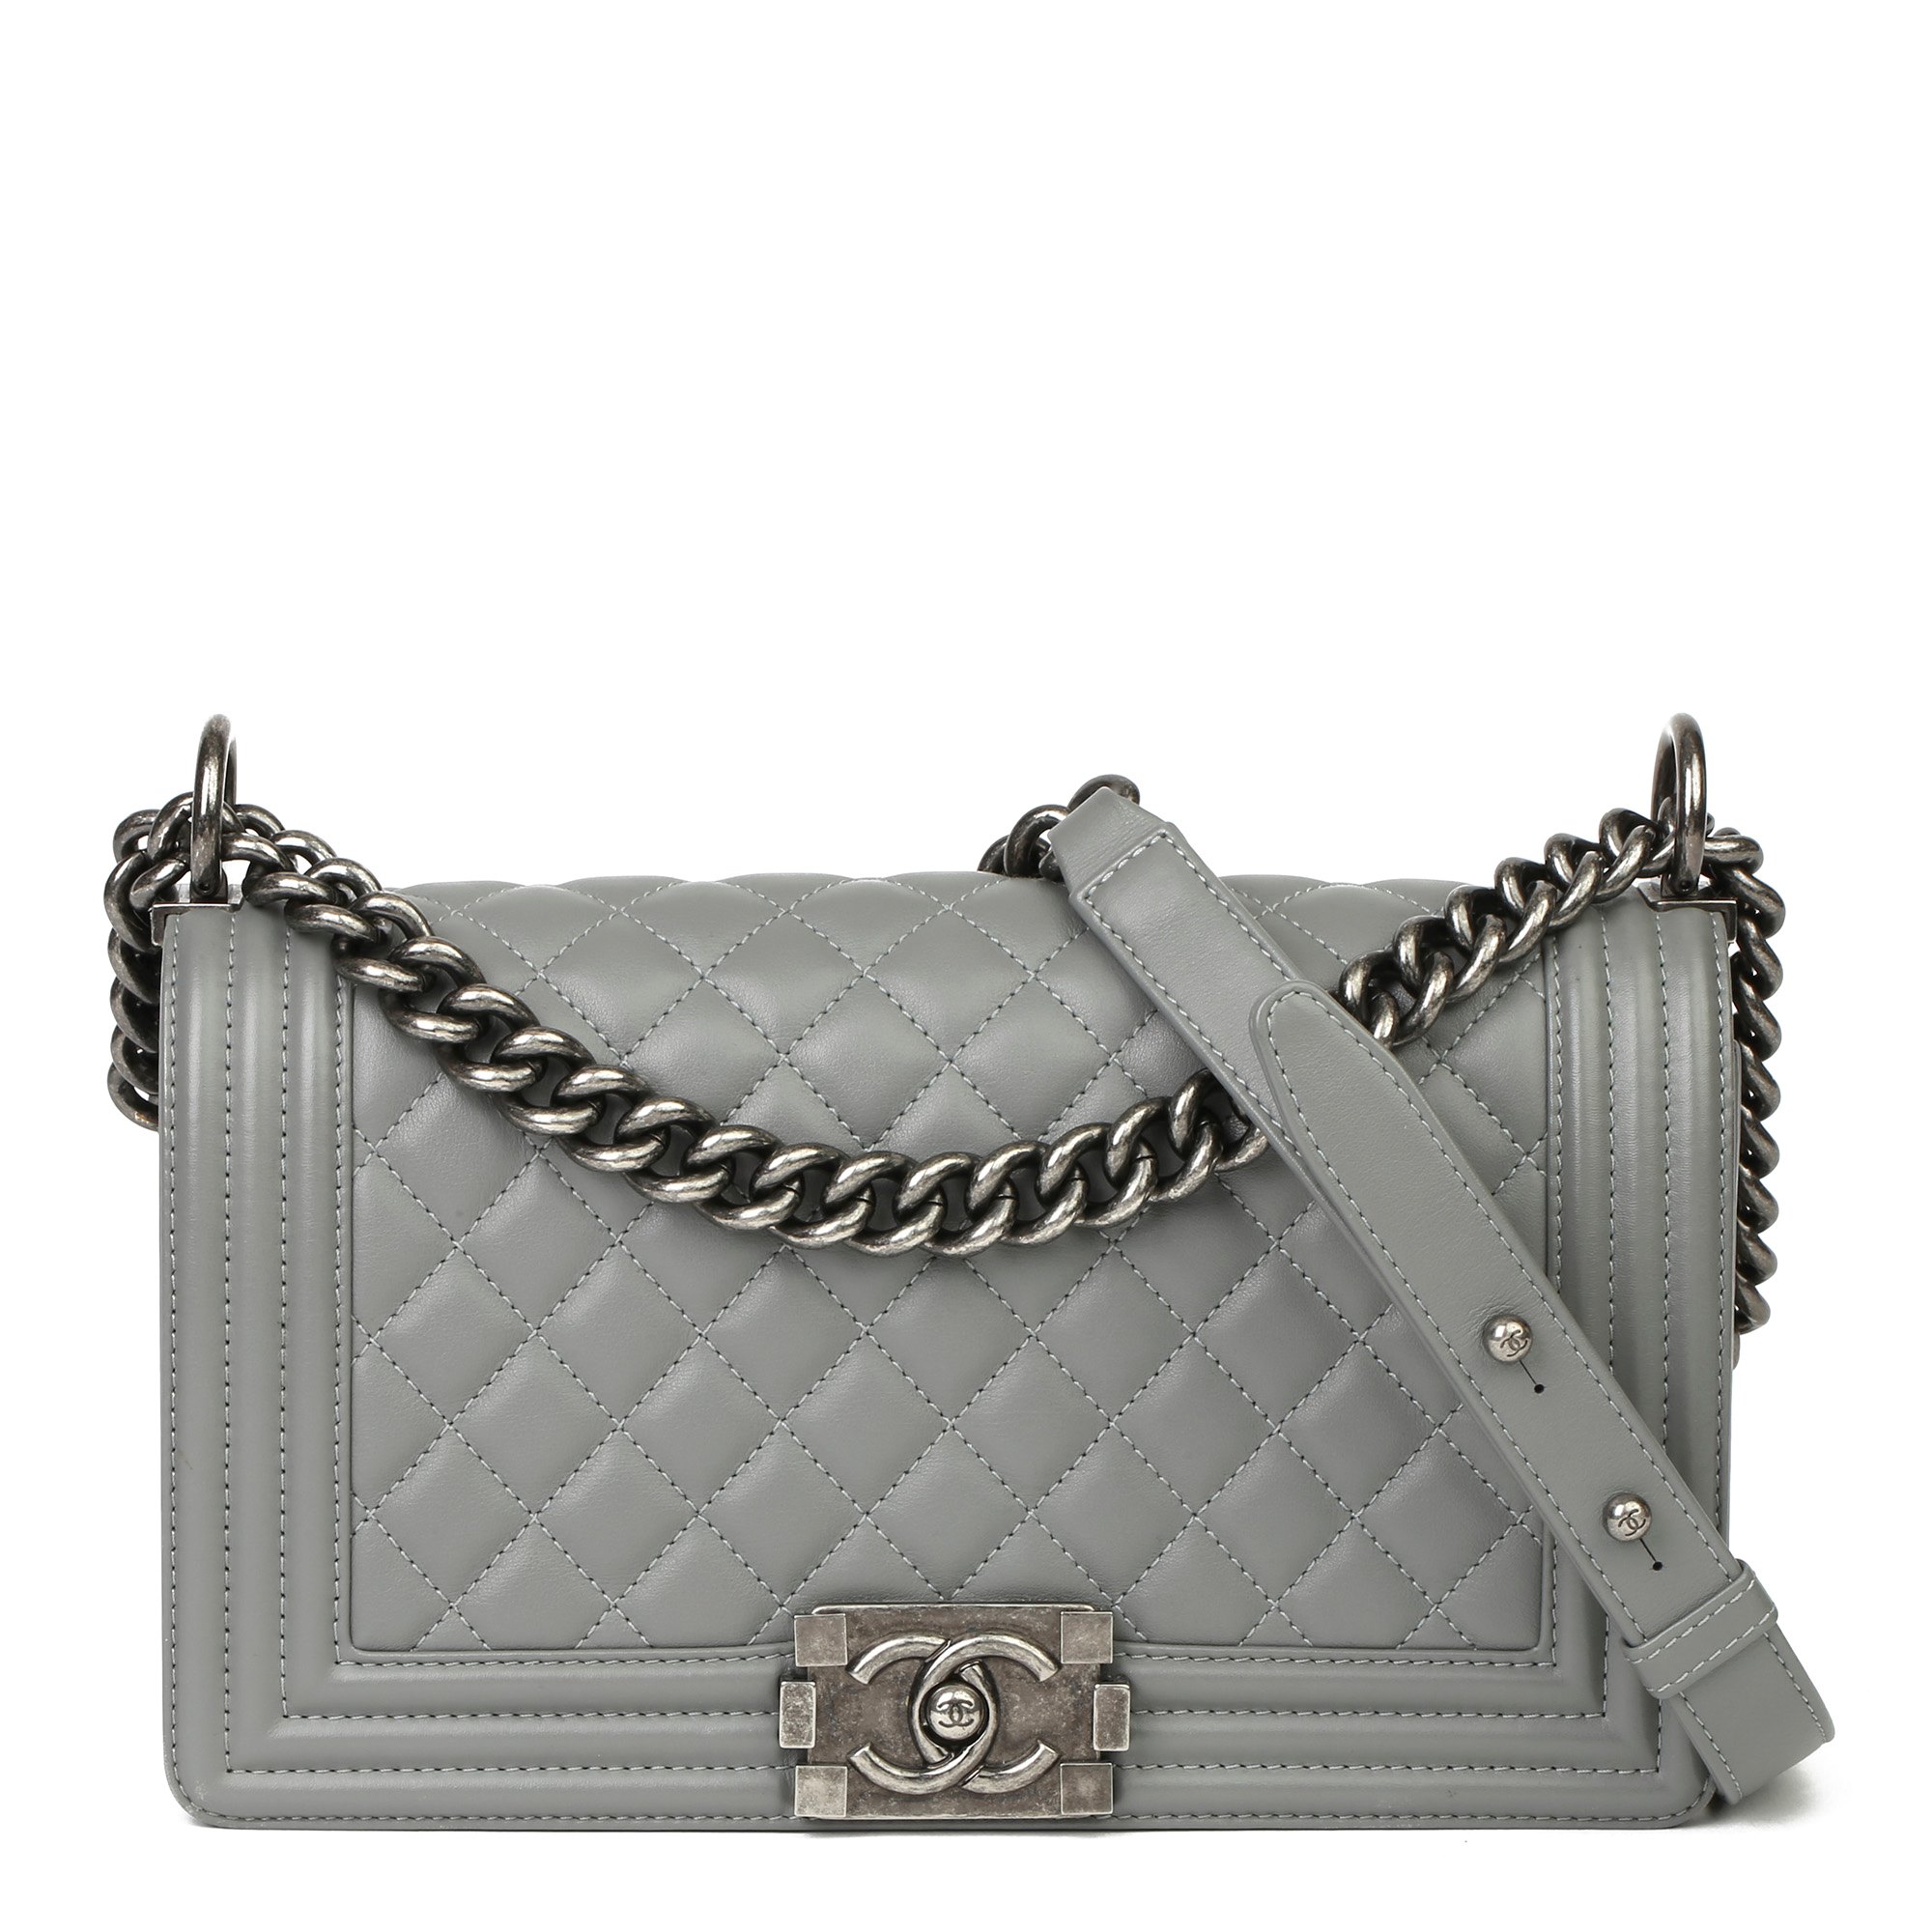 Christian grey chanel Chanel Handbags